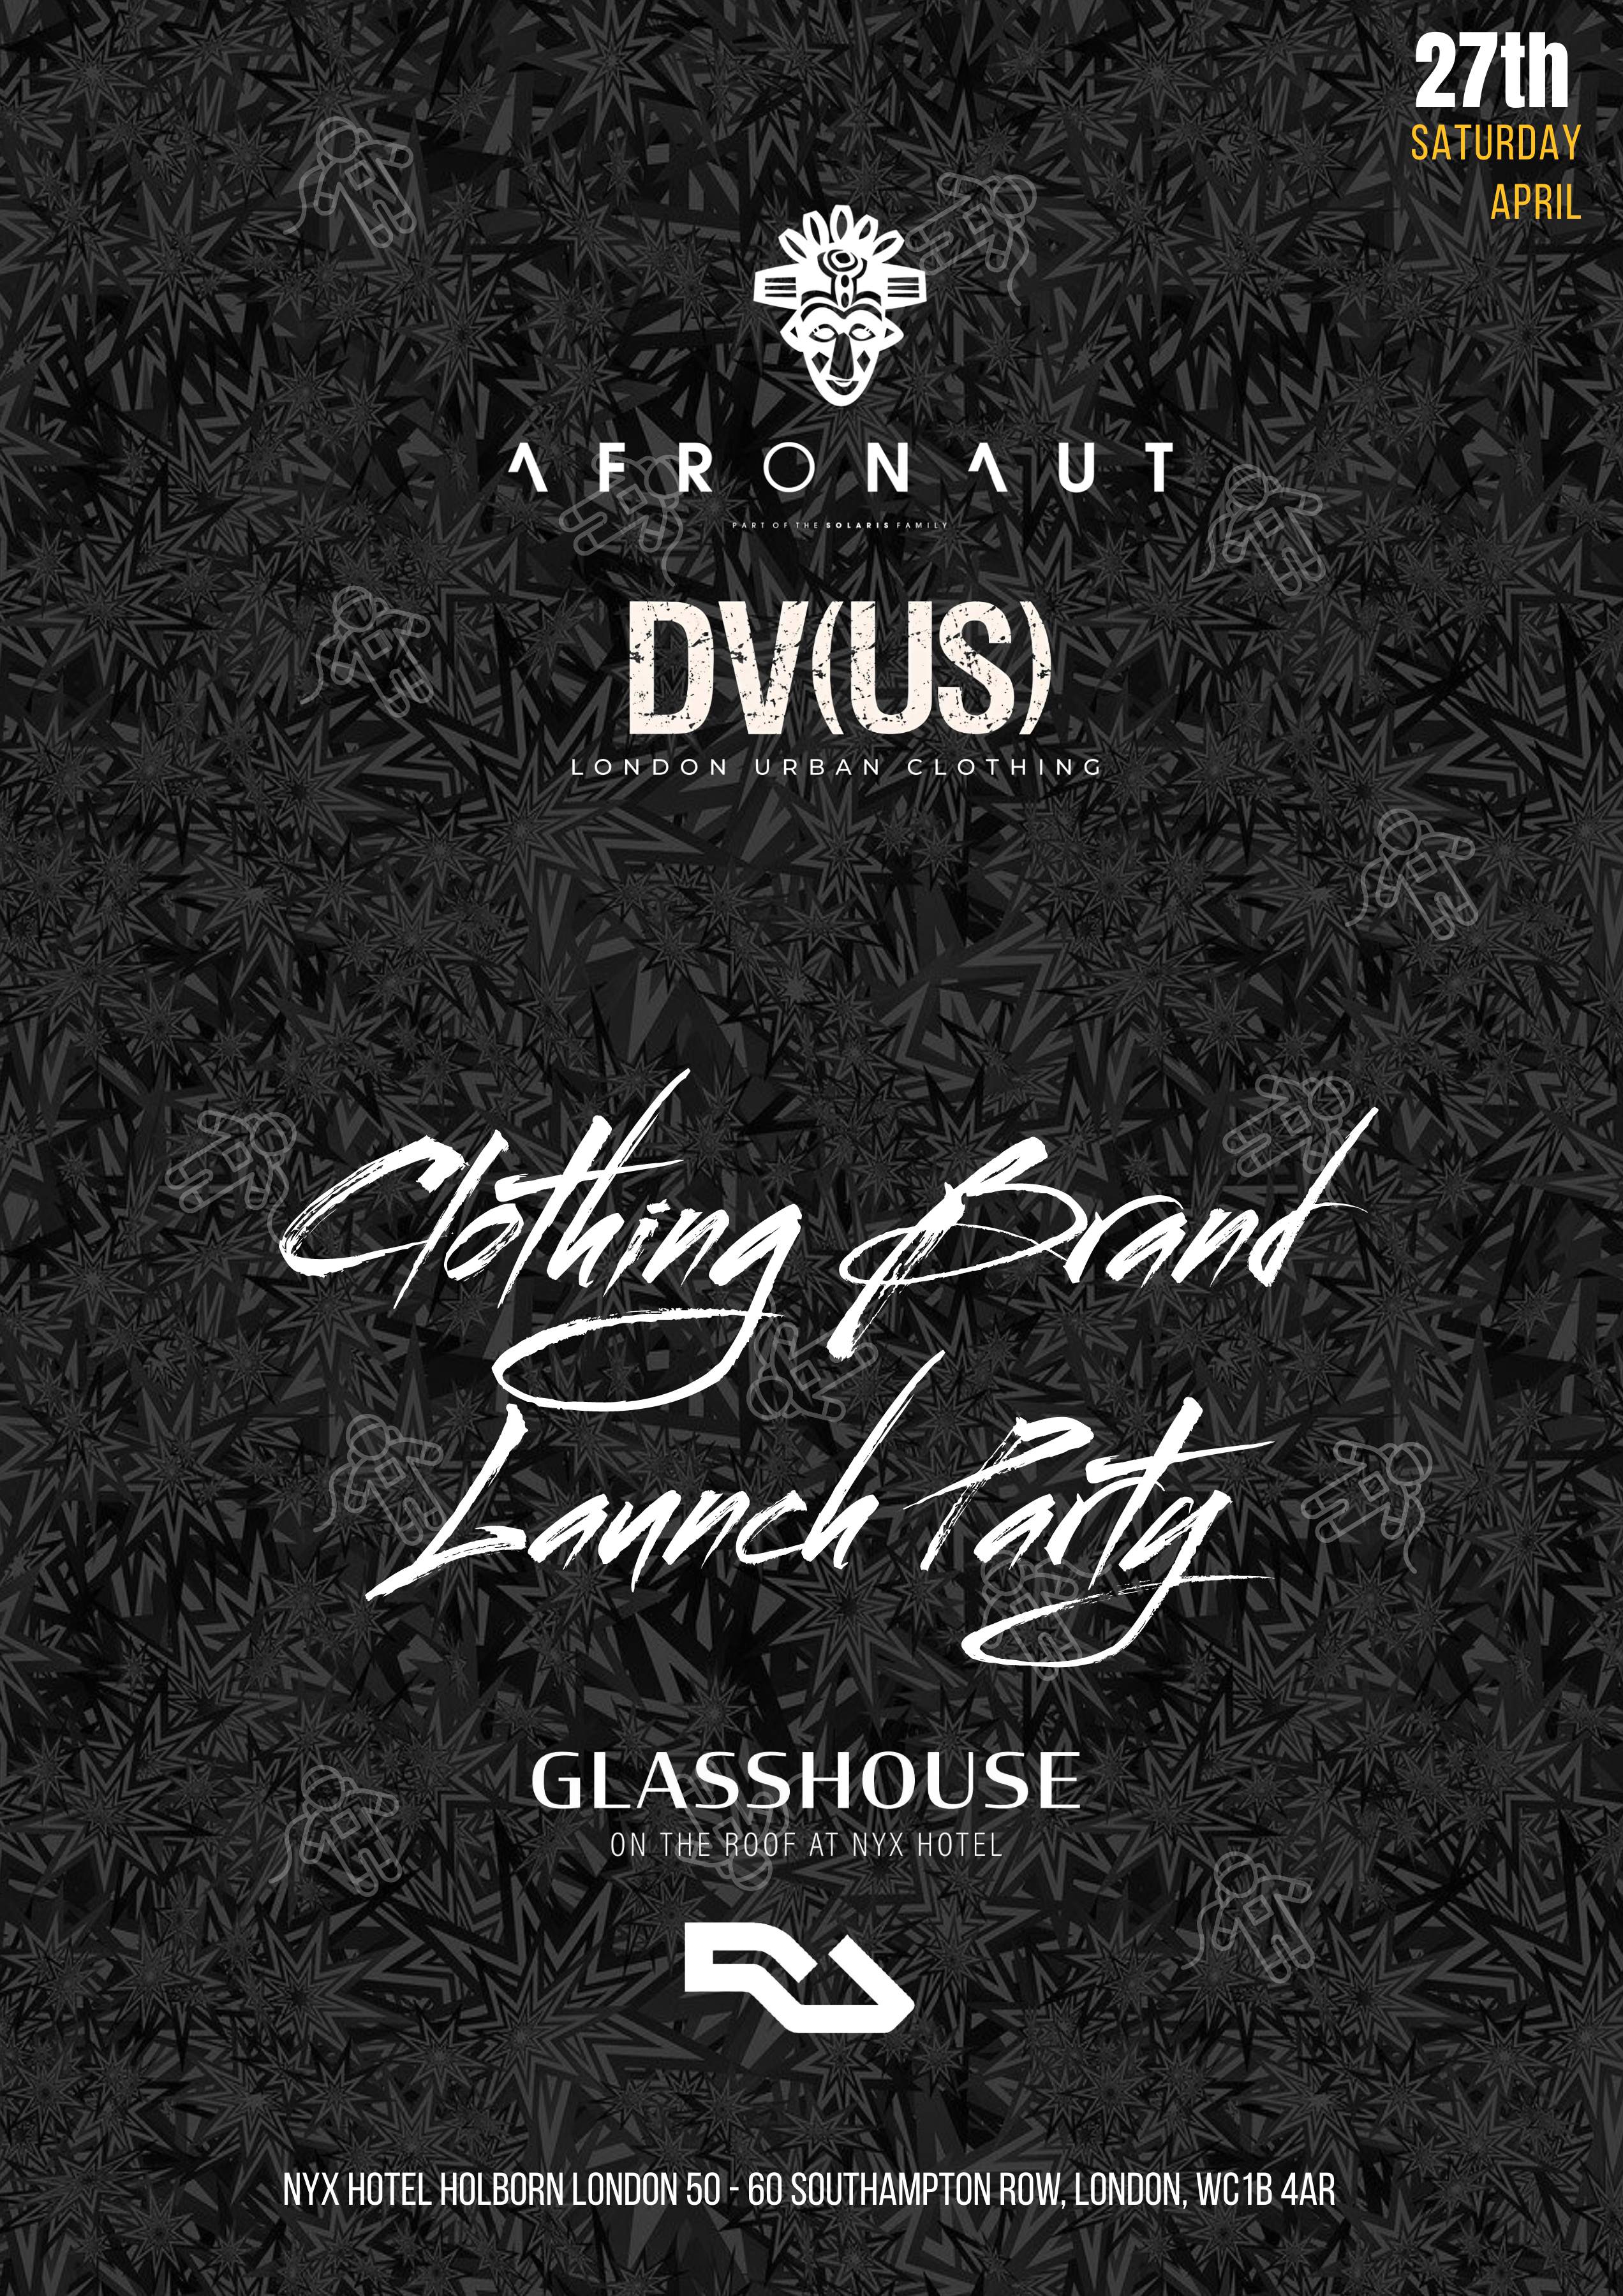 Afronaut x DV (US) - Clothing Brand Launch Party - Página frontal